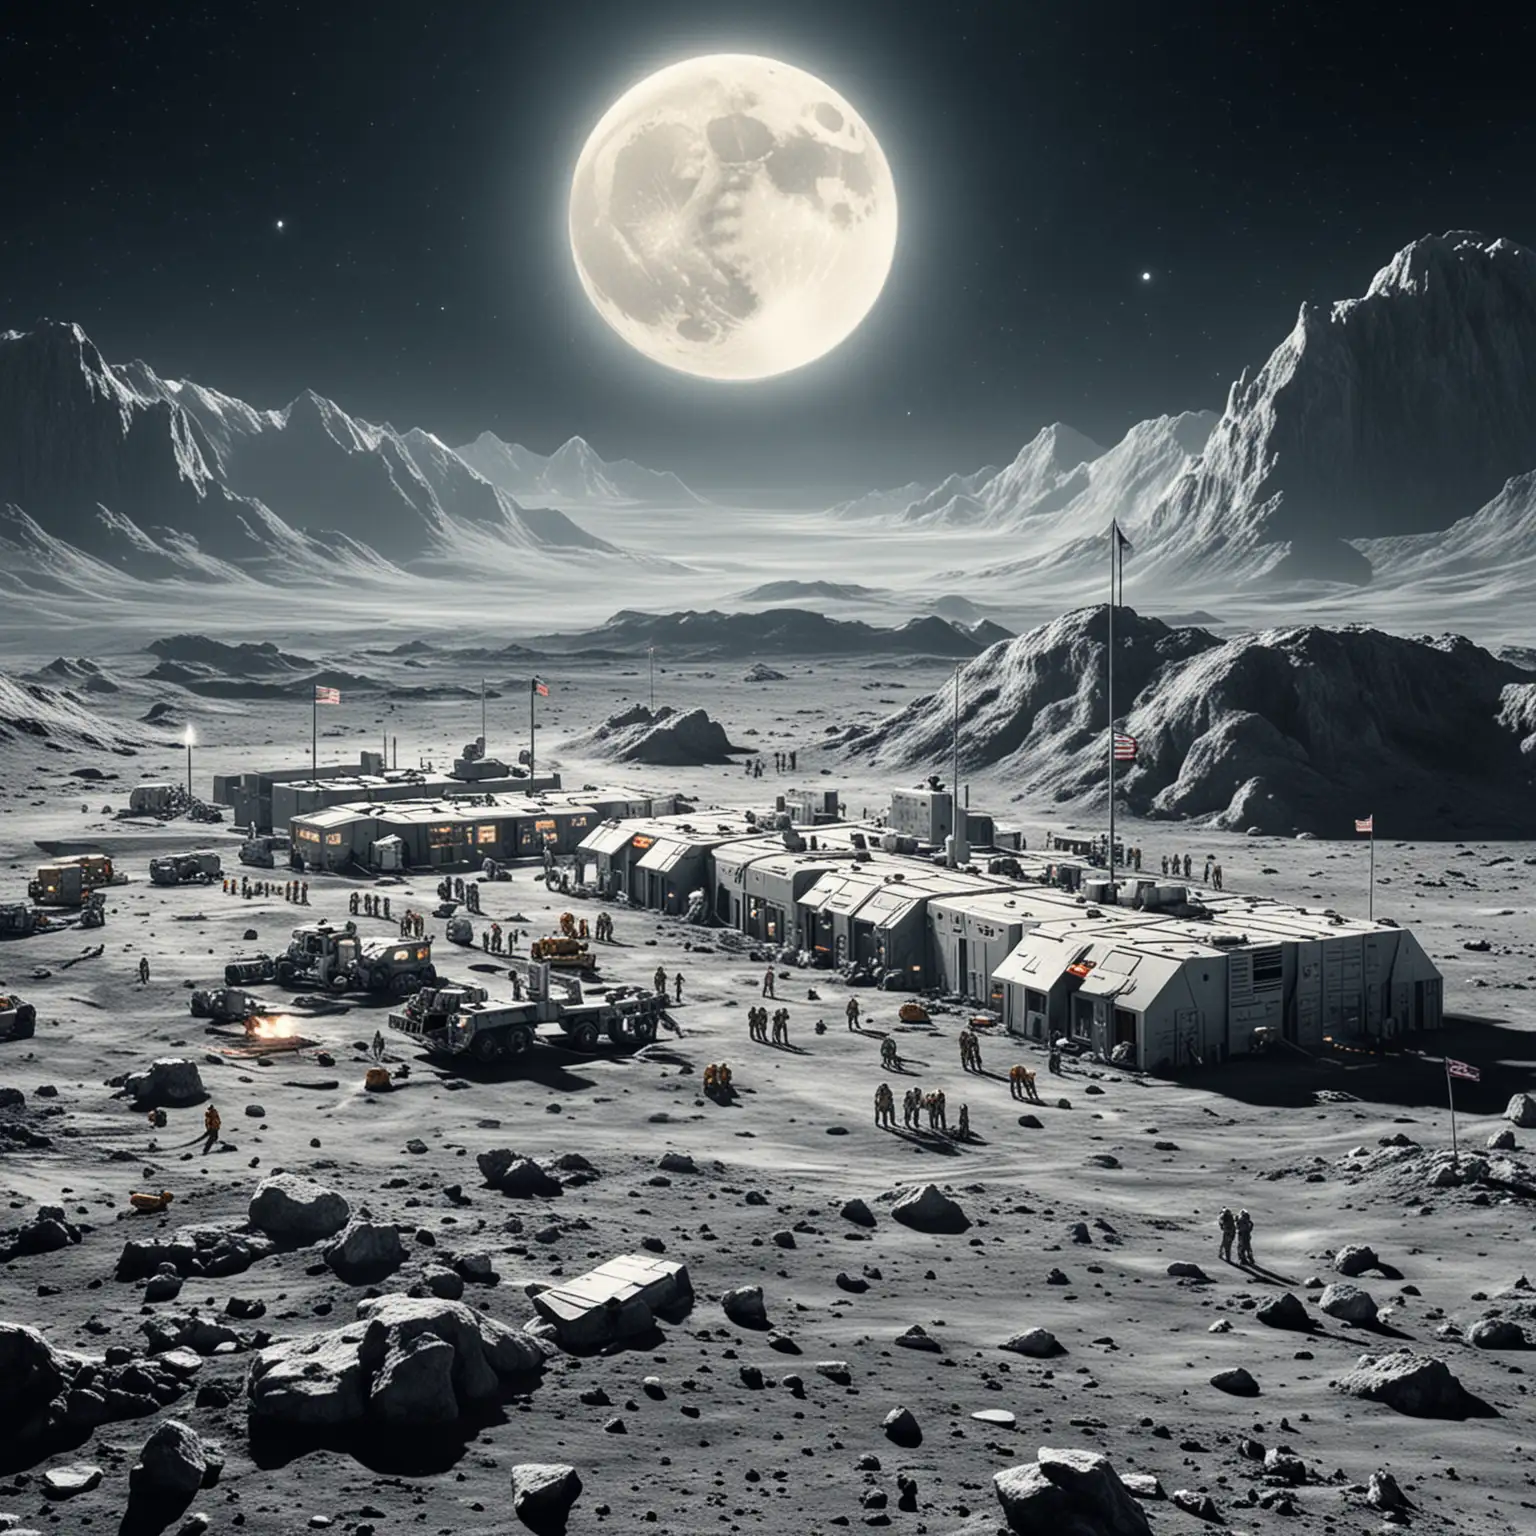 Moon Base Futuristic Lunar Colony with Advanced Technology